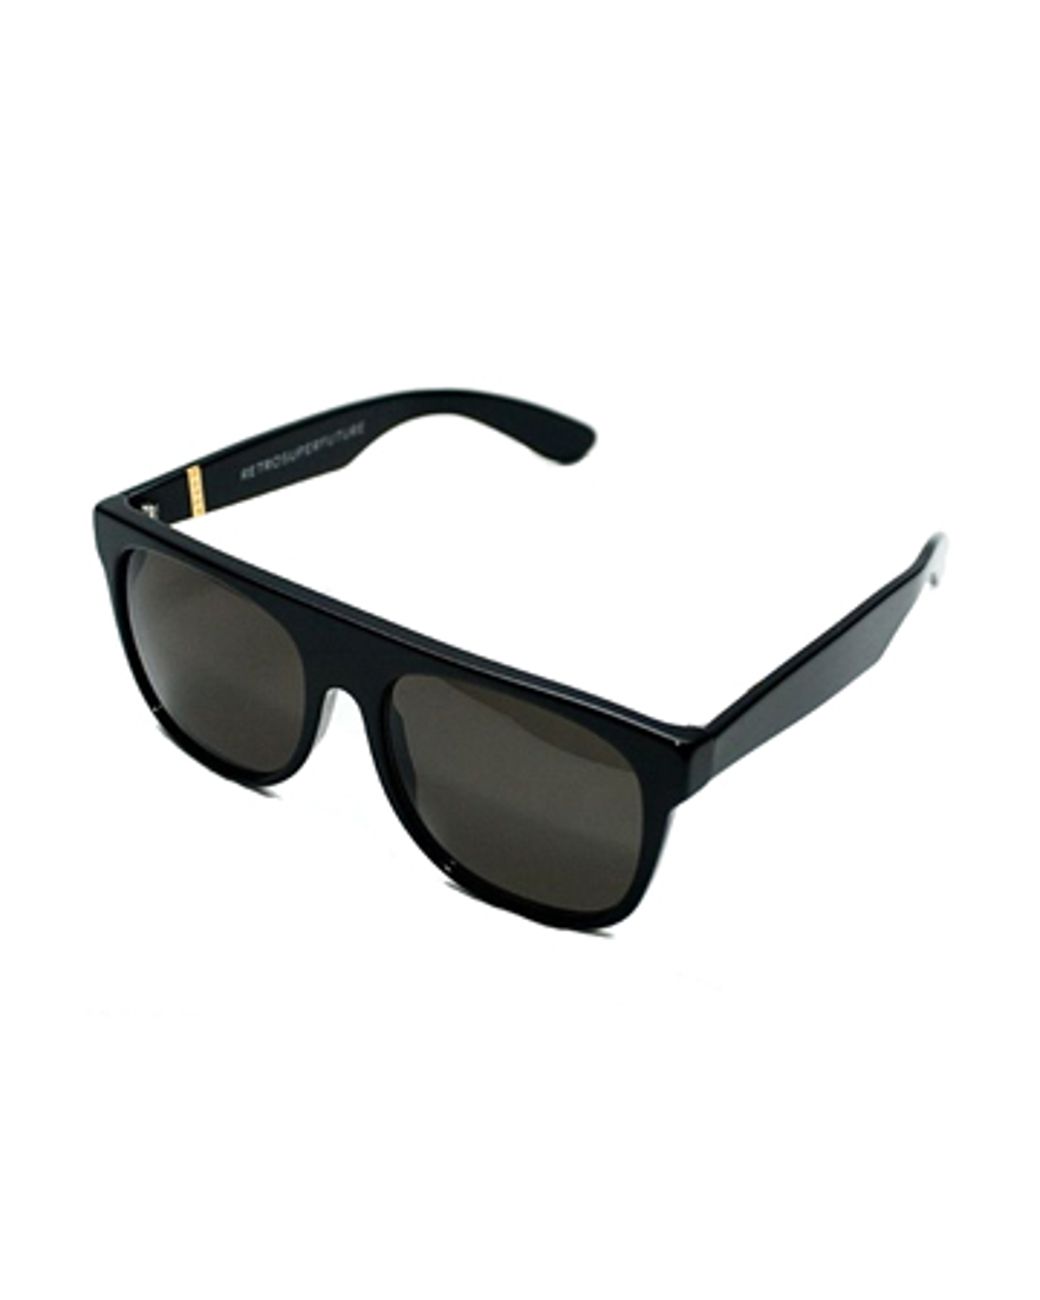 Men's Flat Top Sunglasses Impero Super Clear Black Frame Blue mirror Lens Sport 